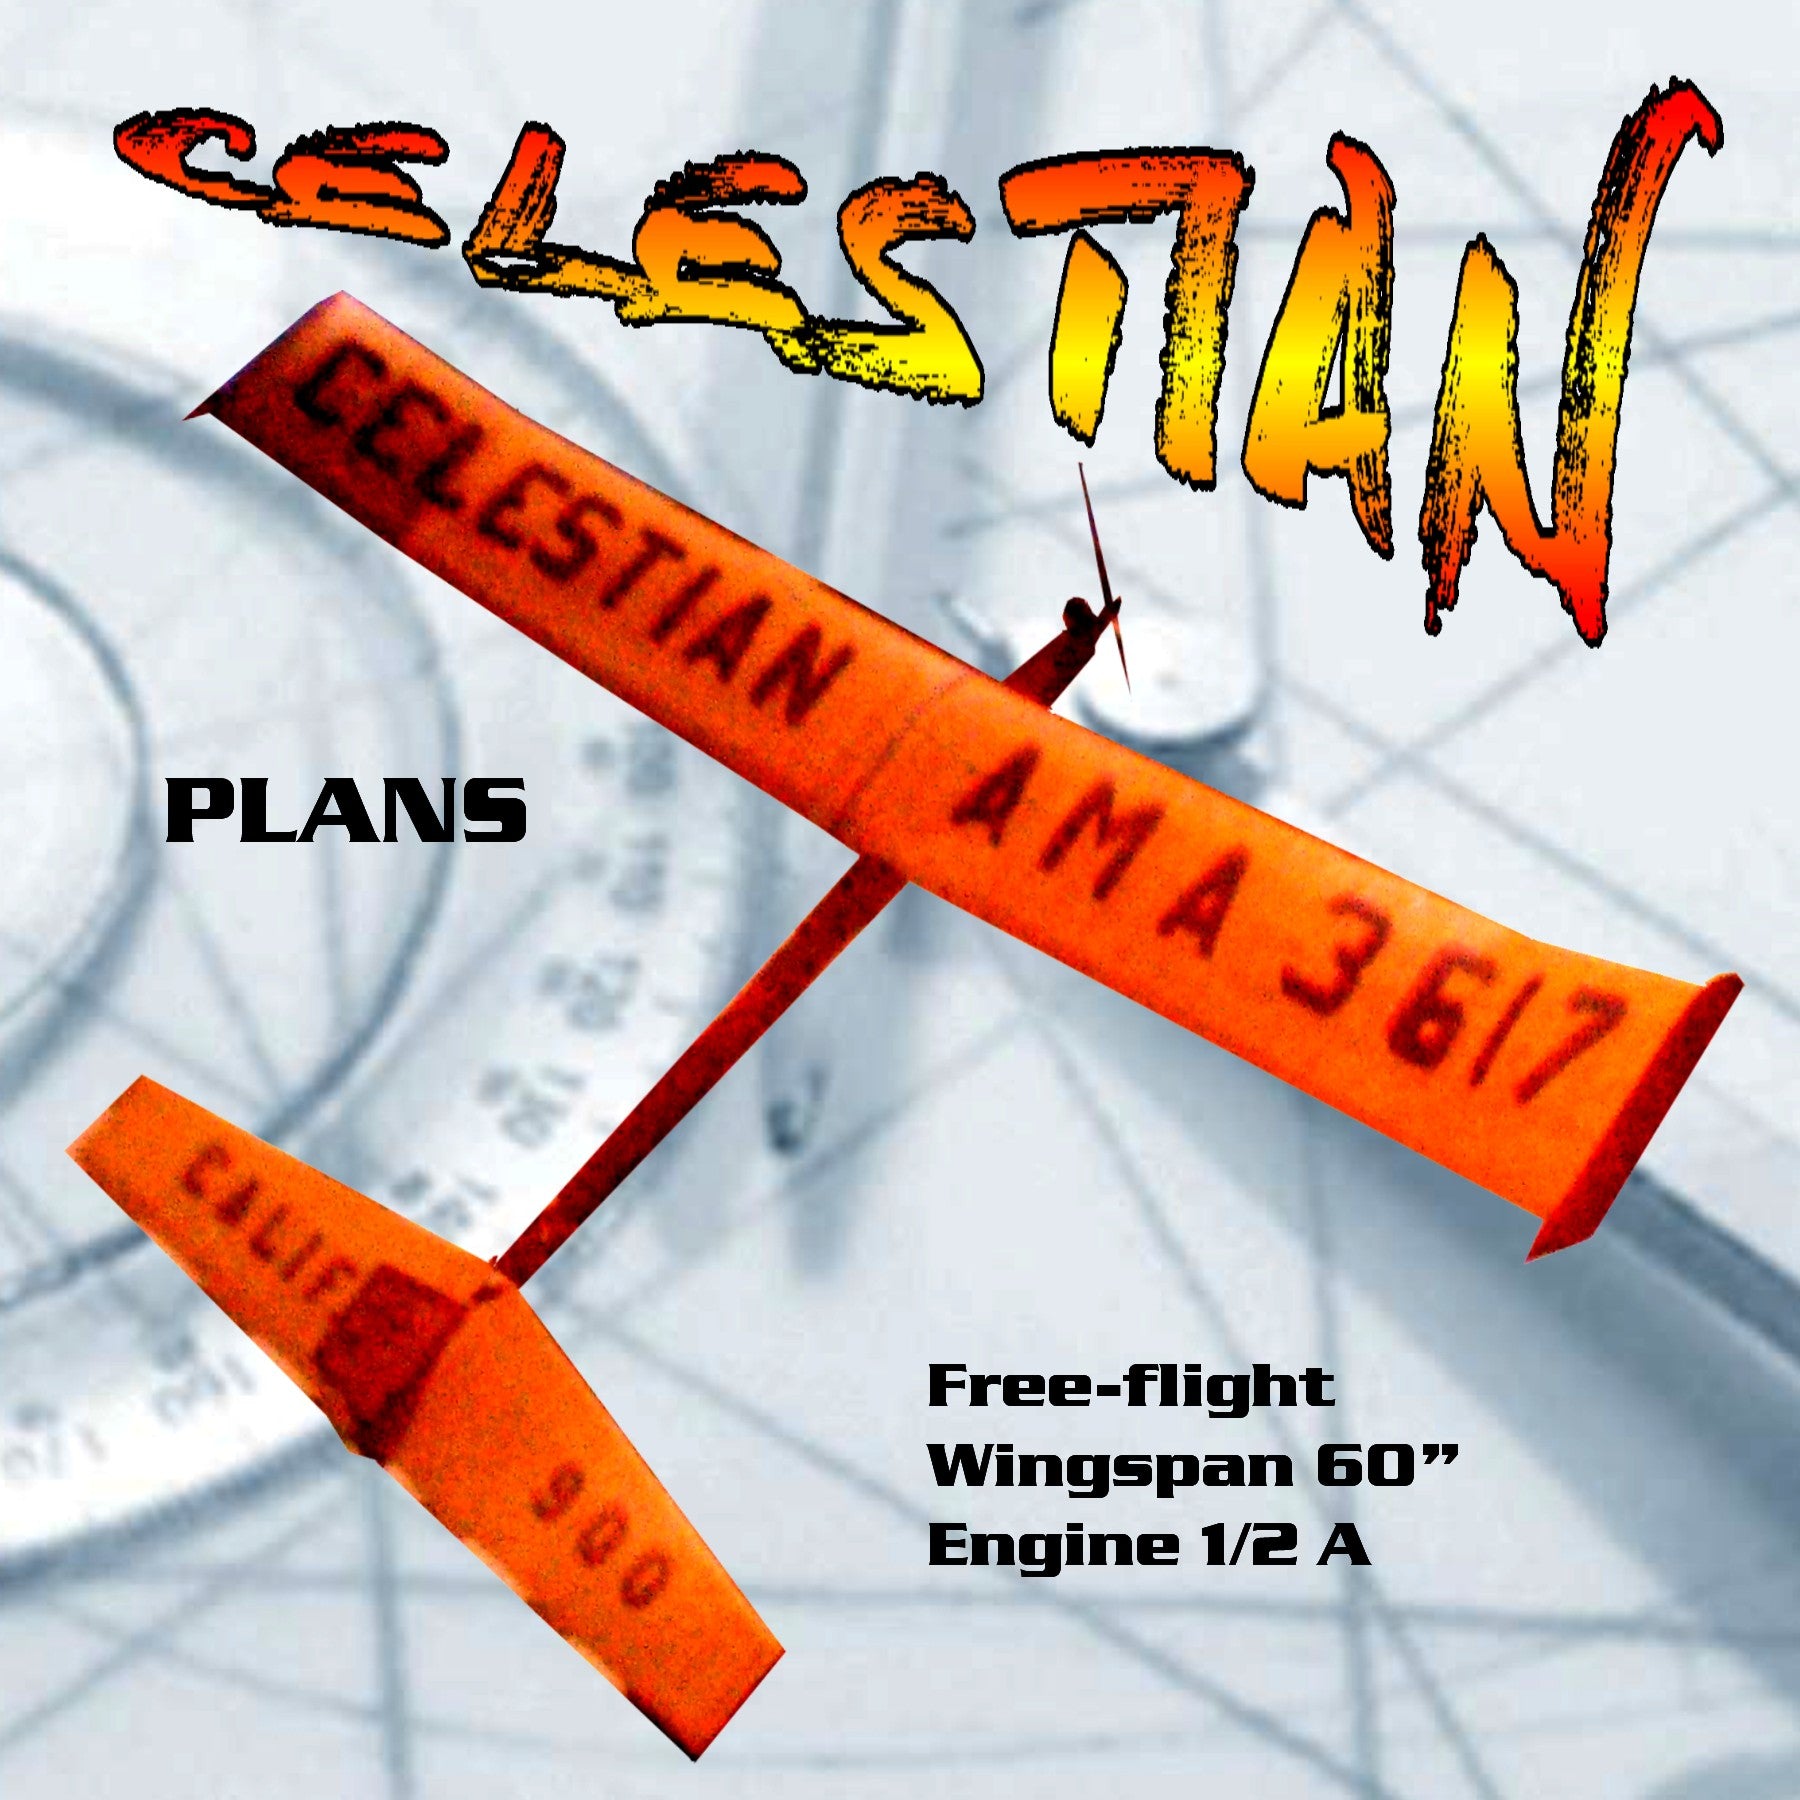 printed plan vintage 1963 free-flight 1/2a celestian set a national record,